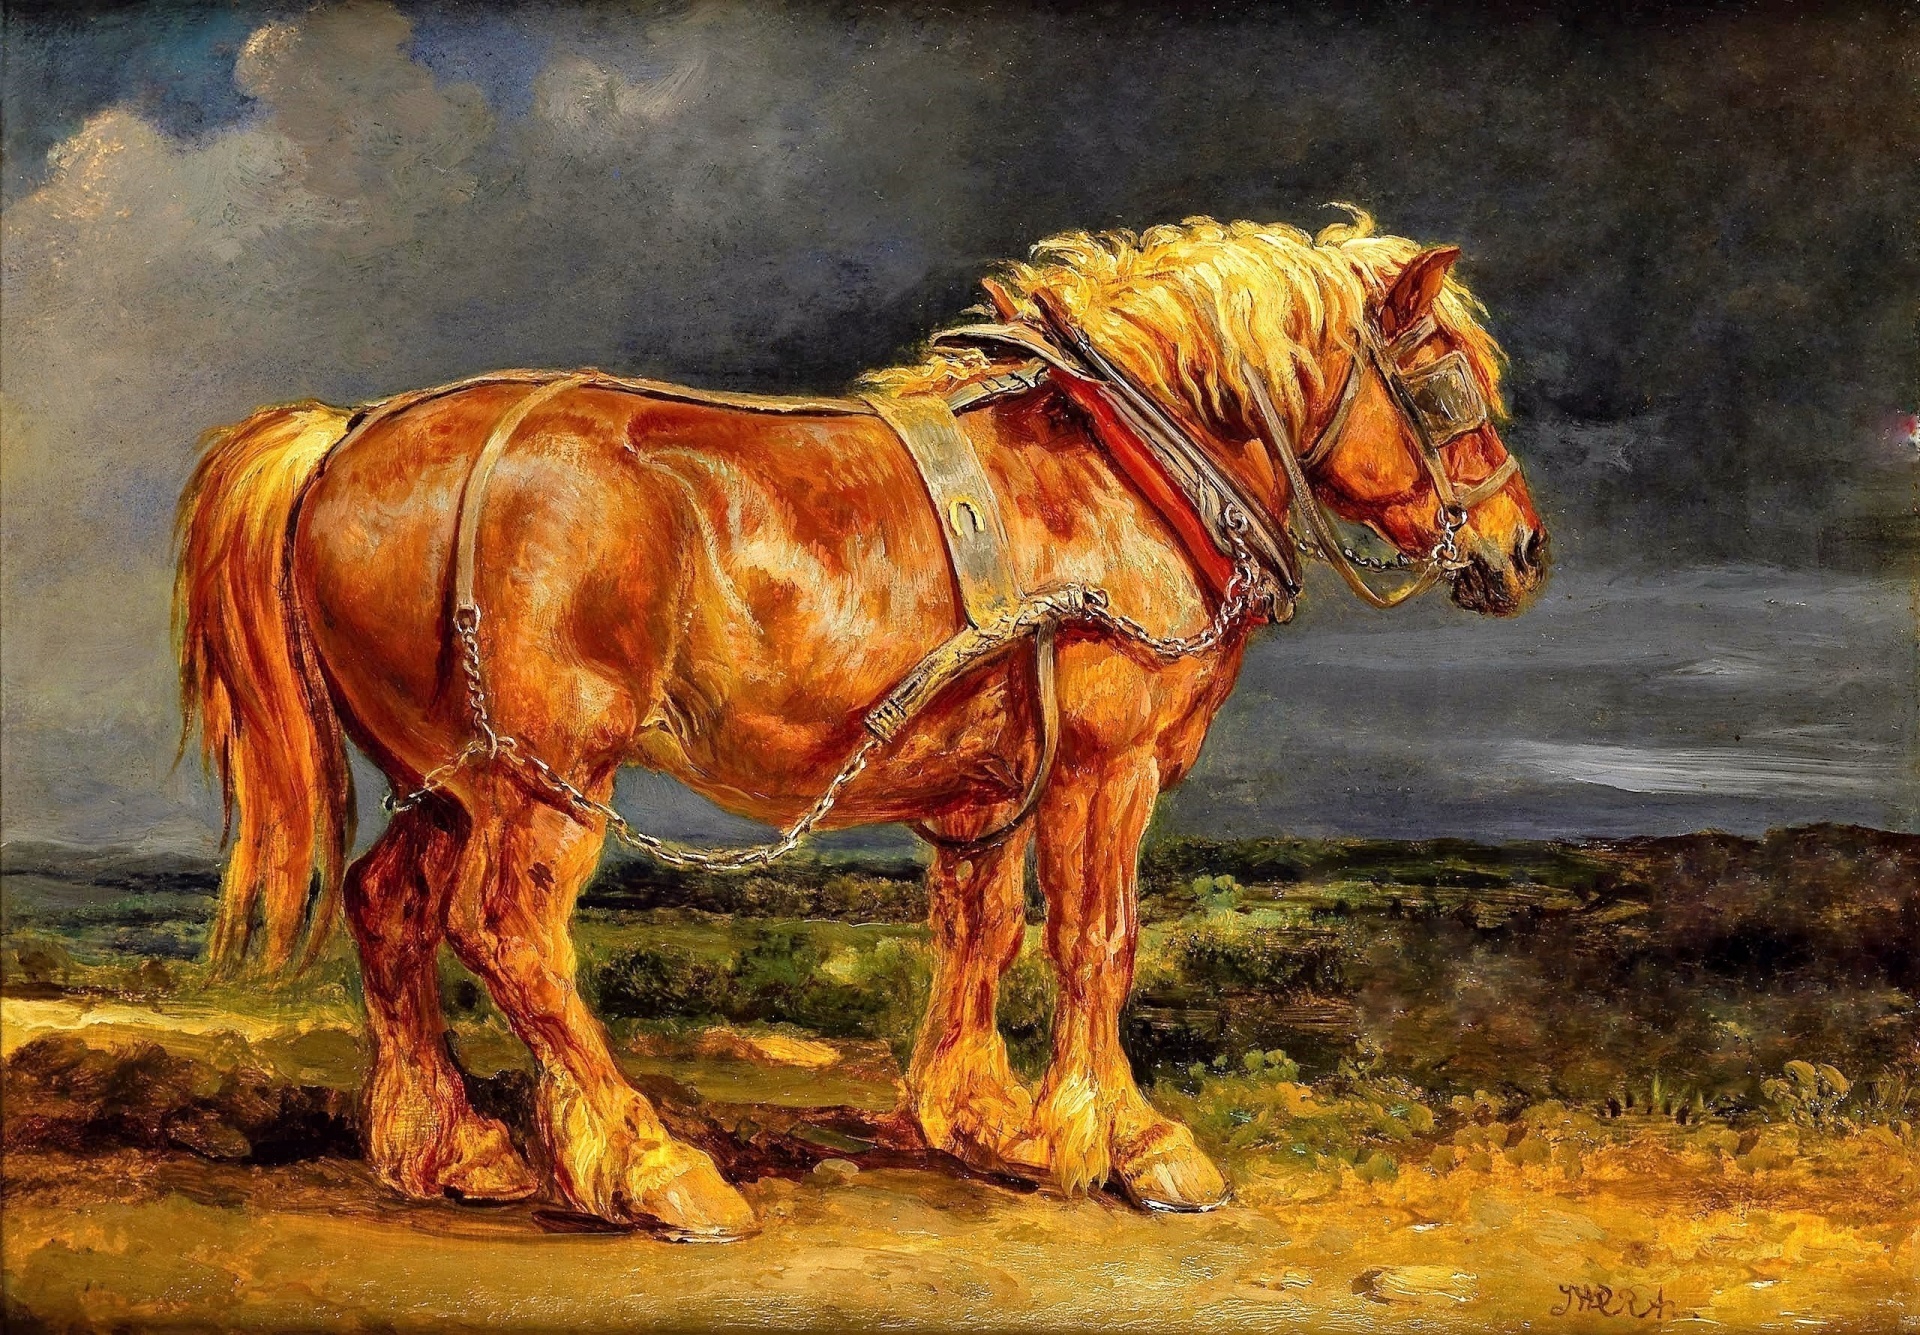 A work horse, standing on a hillside, as a storm approaches